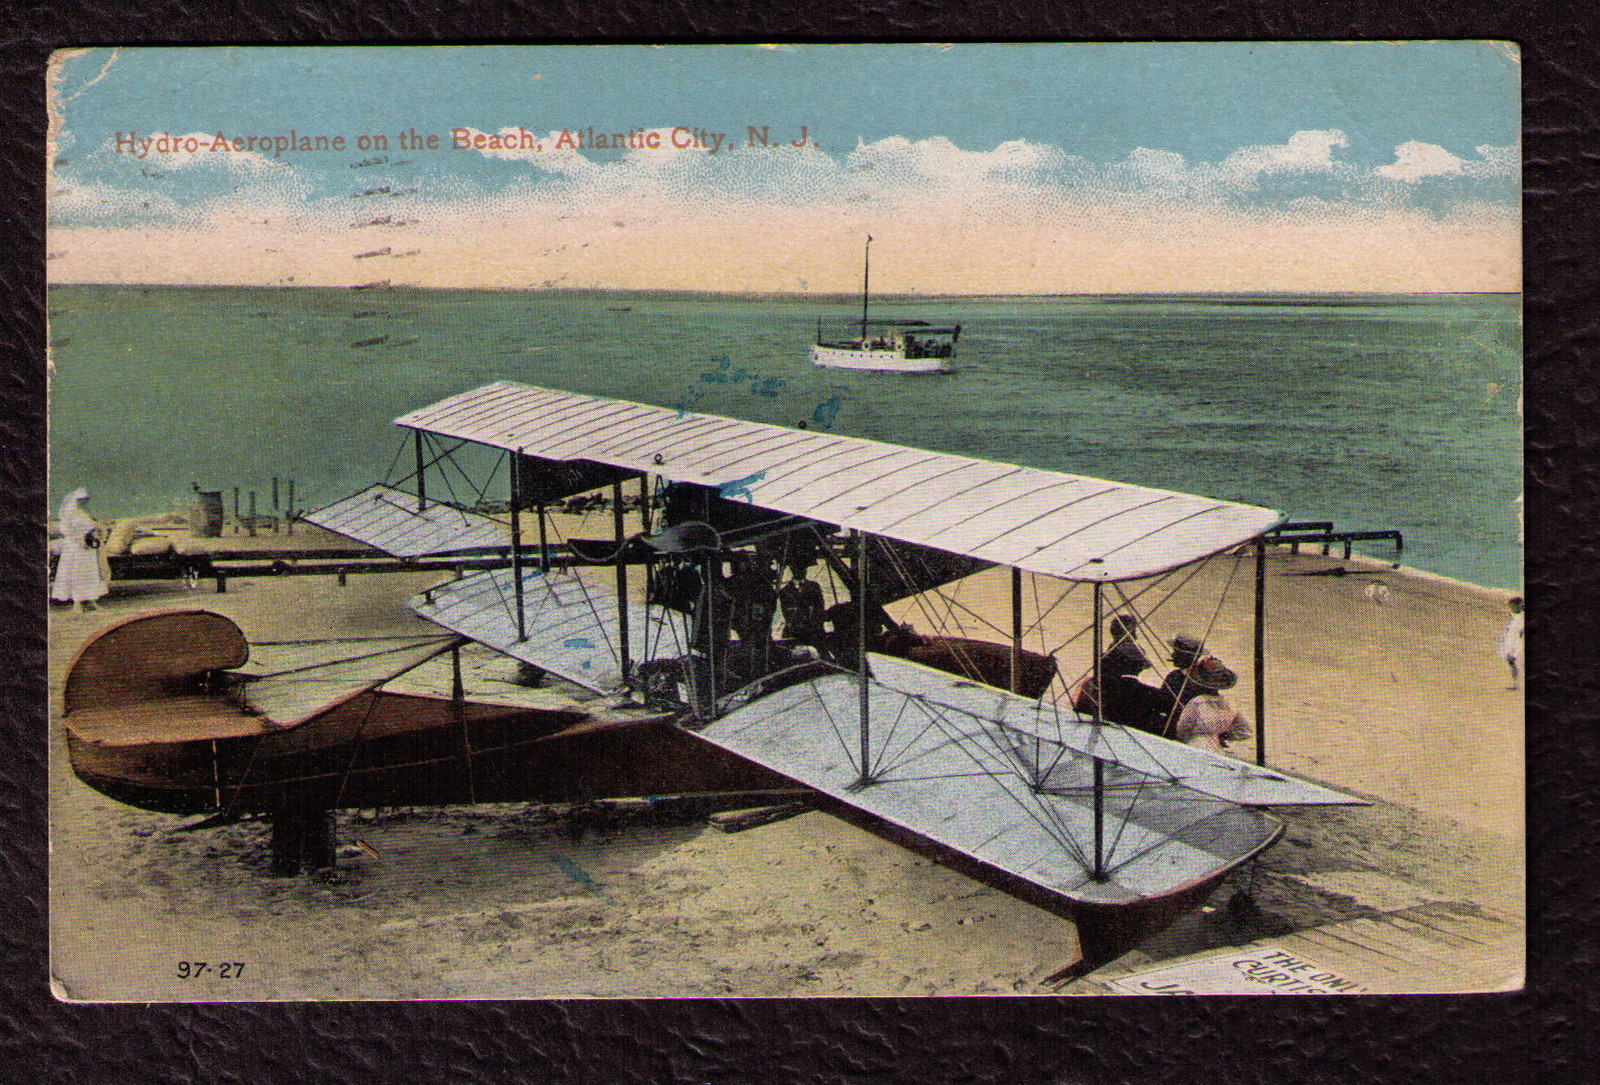 Atlantic City - Curtis aero-plane - out of daye - 1918